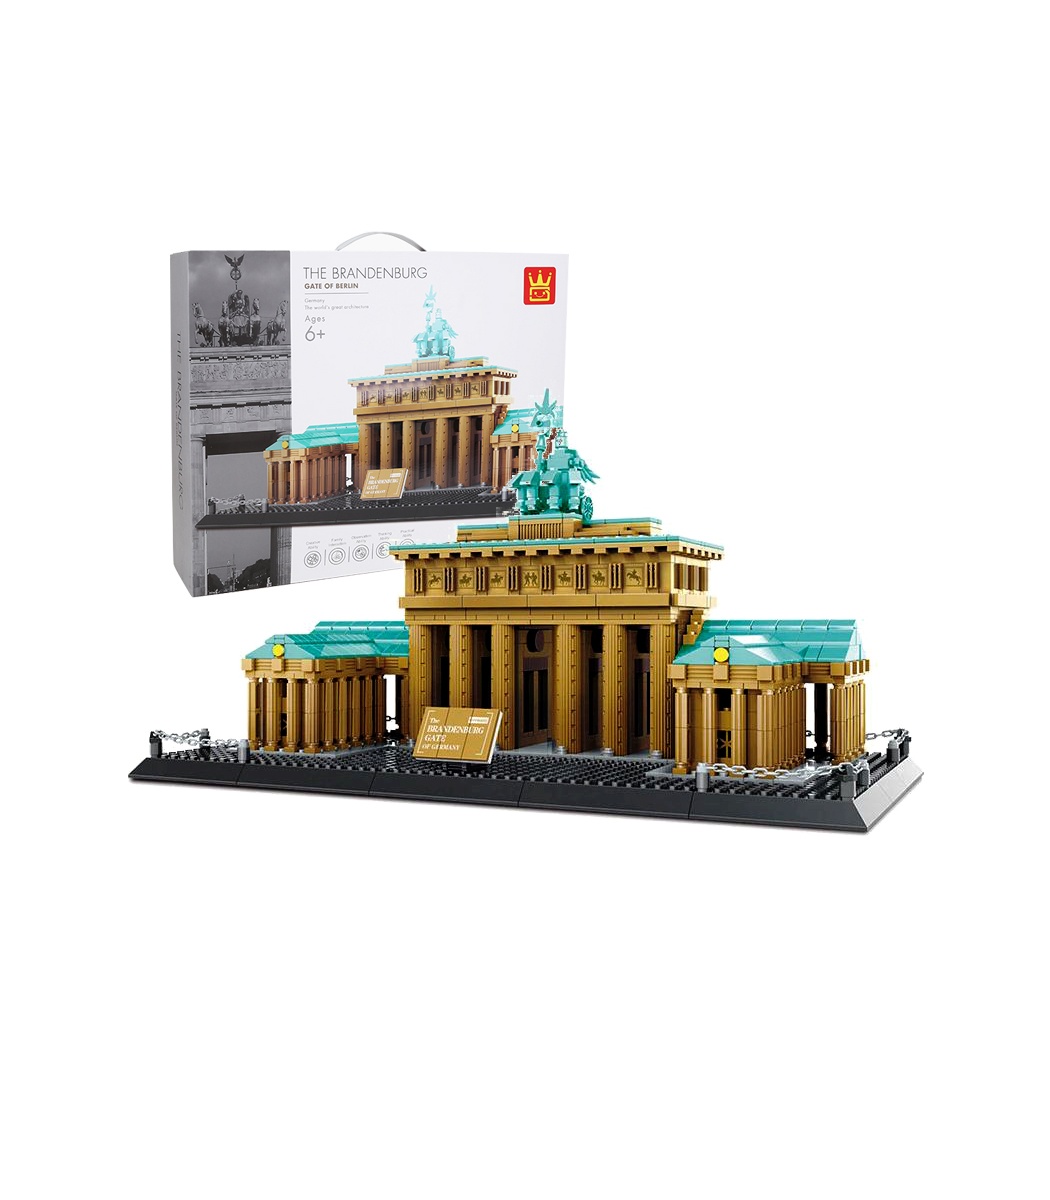 Wange 6211 Bauklötze Weltberühmt Deutschland Brandenburg Gate Modell 1552PCS OVP 